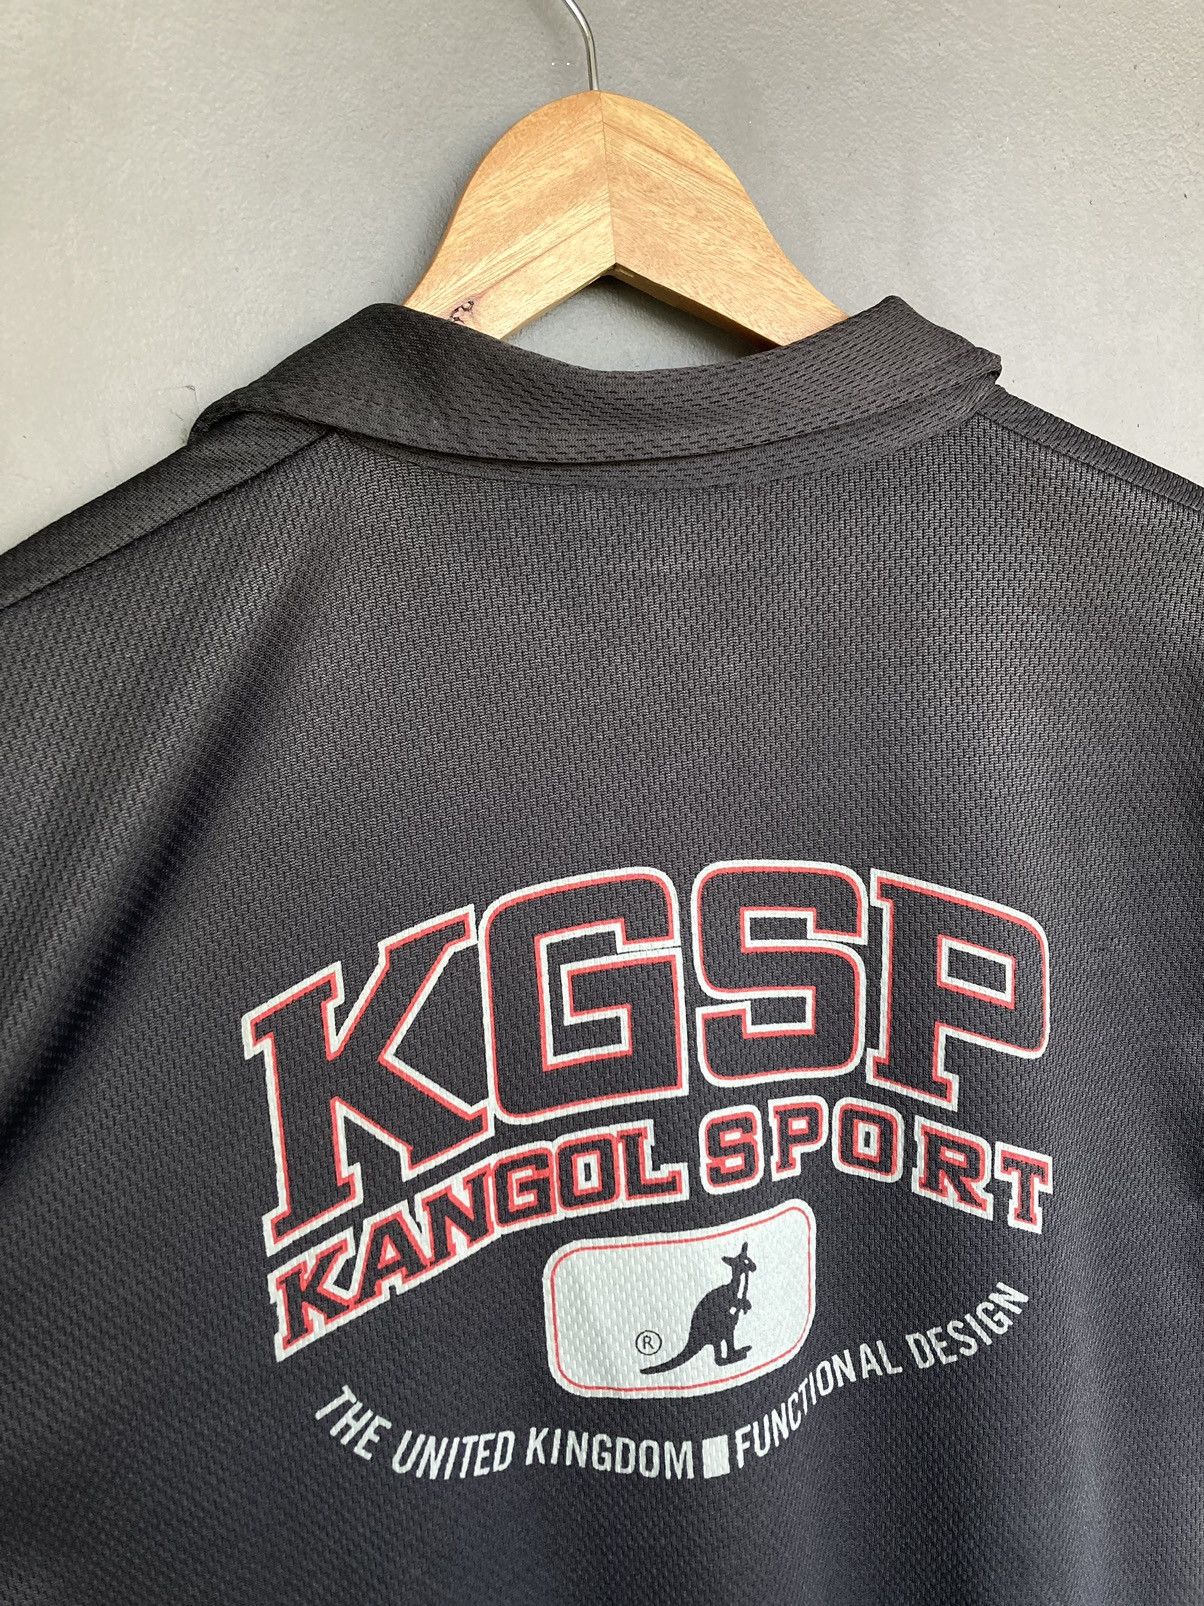 Vintage Kangol Sport Jersey - 7